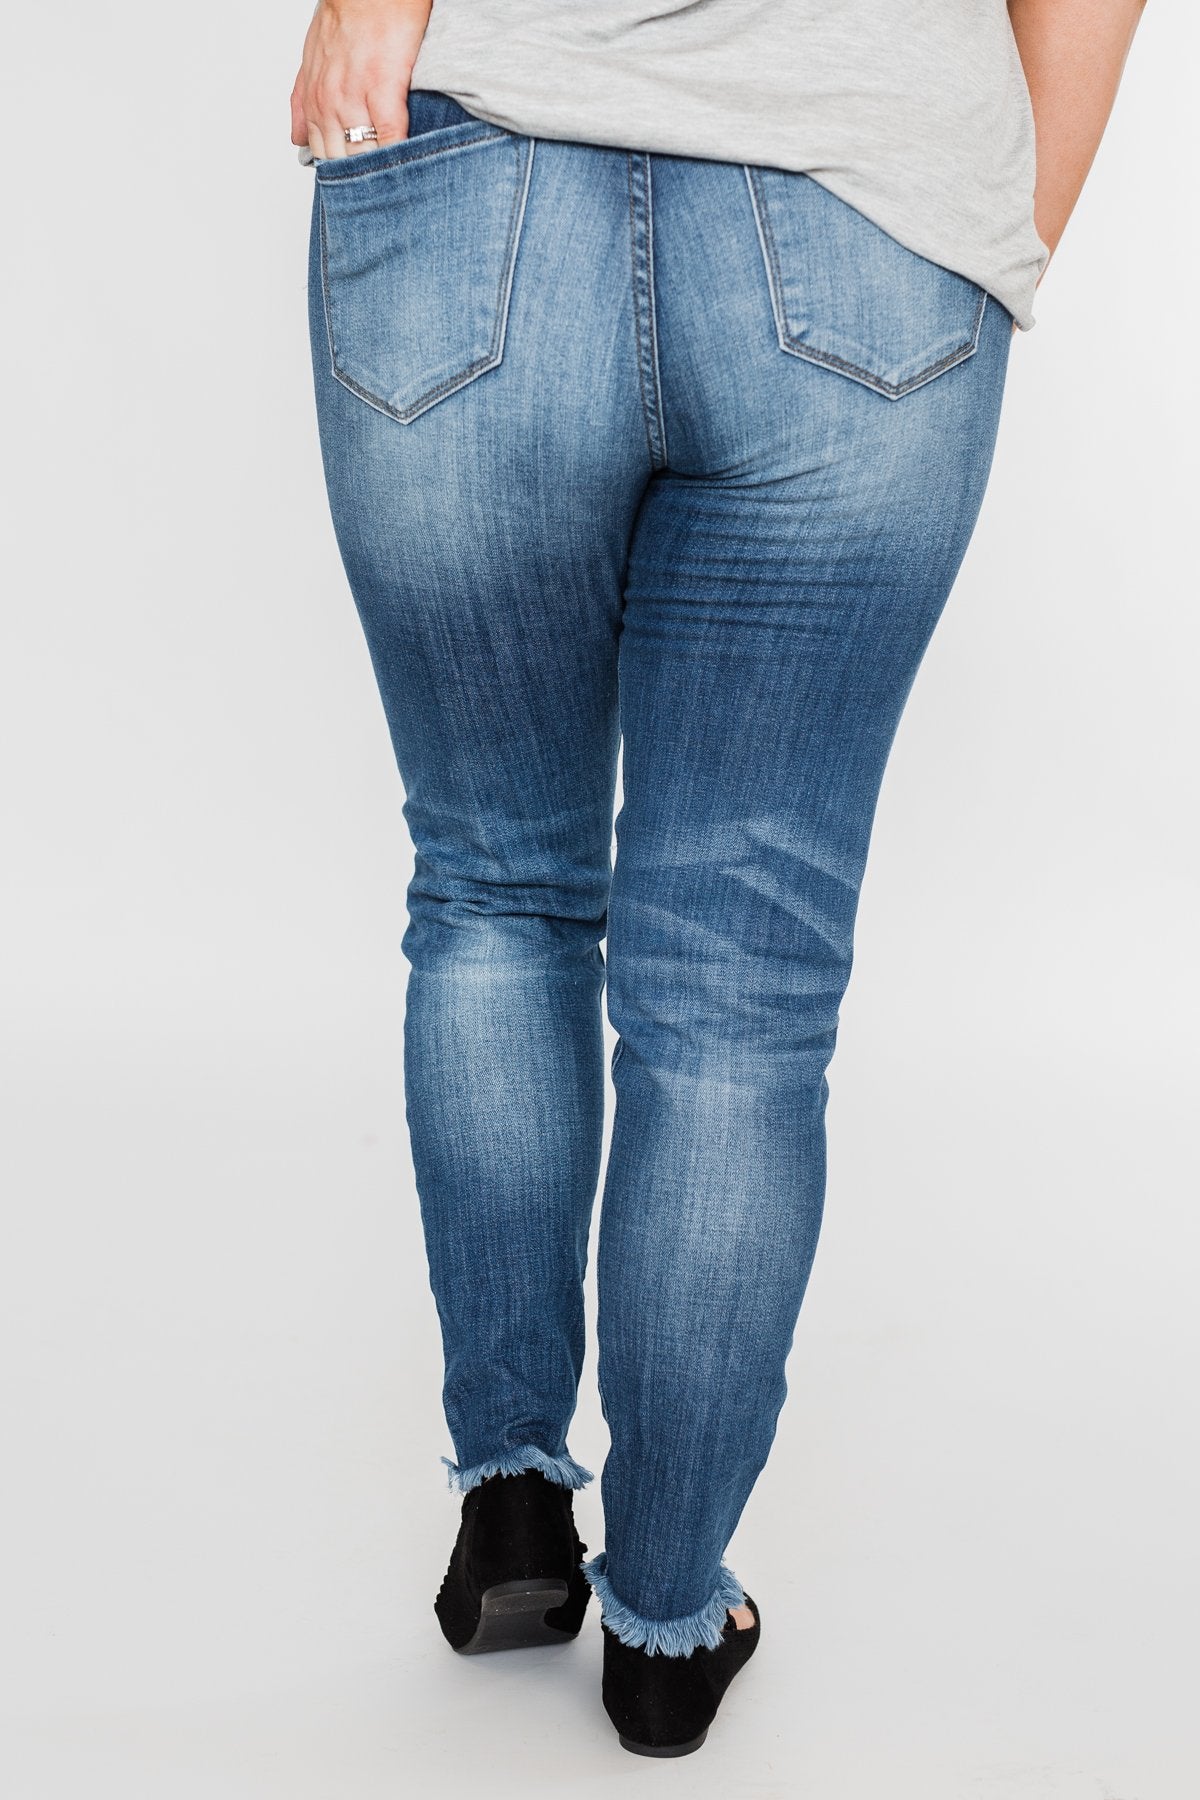 KanCan Distressed Skinny Jeans- Sammy Wash